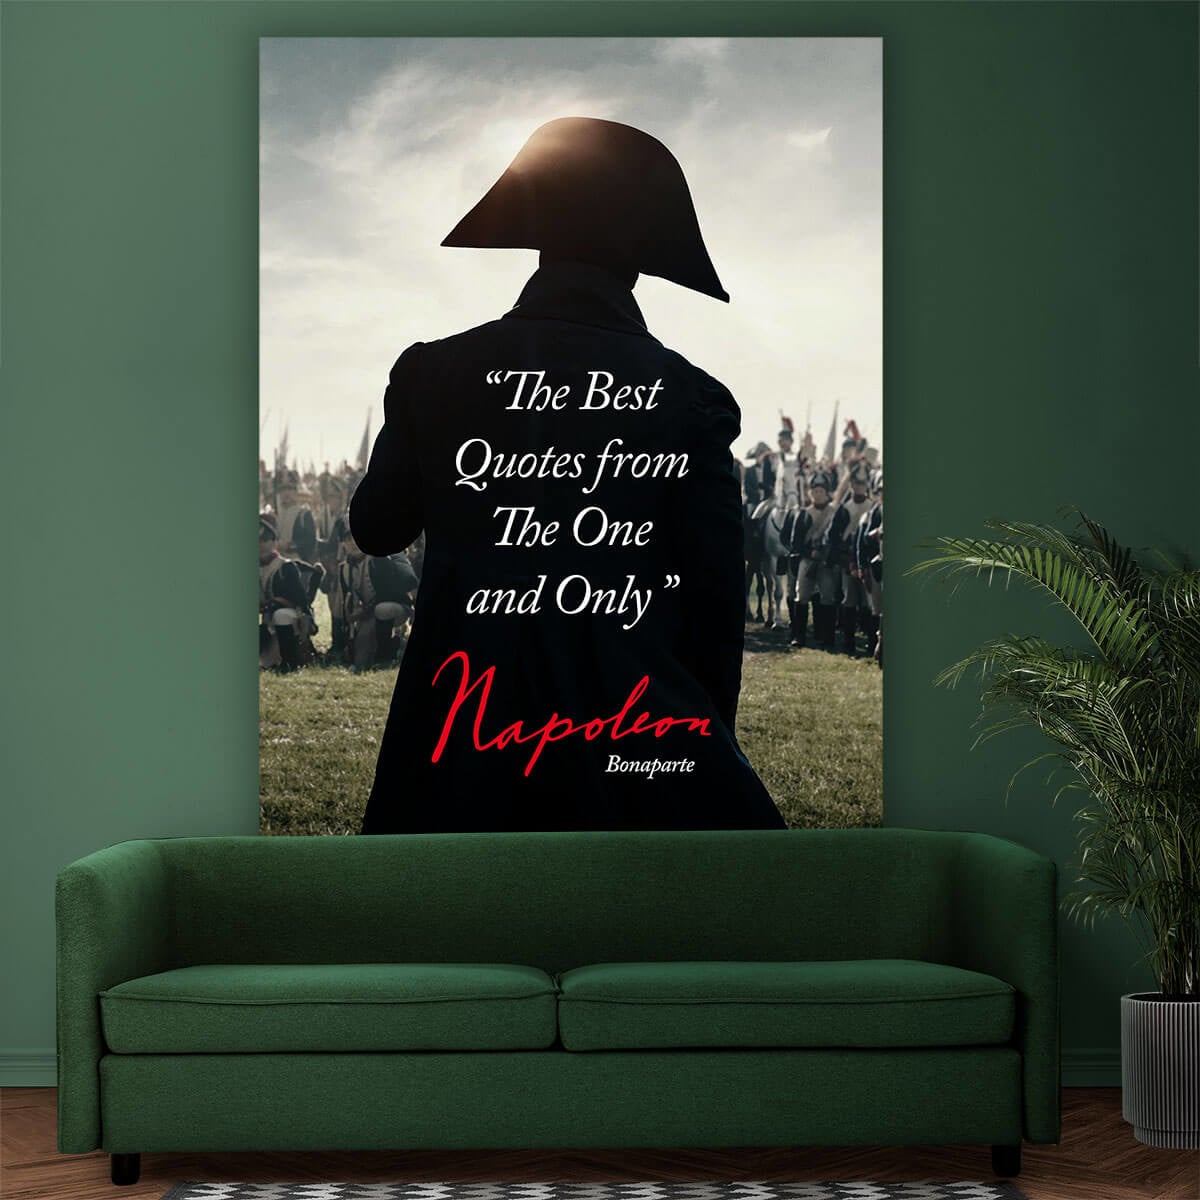 High-Quality Canvas Print of Napoleon Bonaparte's Wisdom